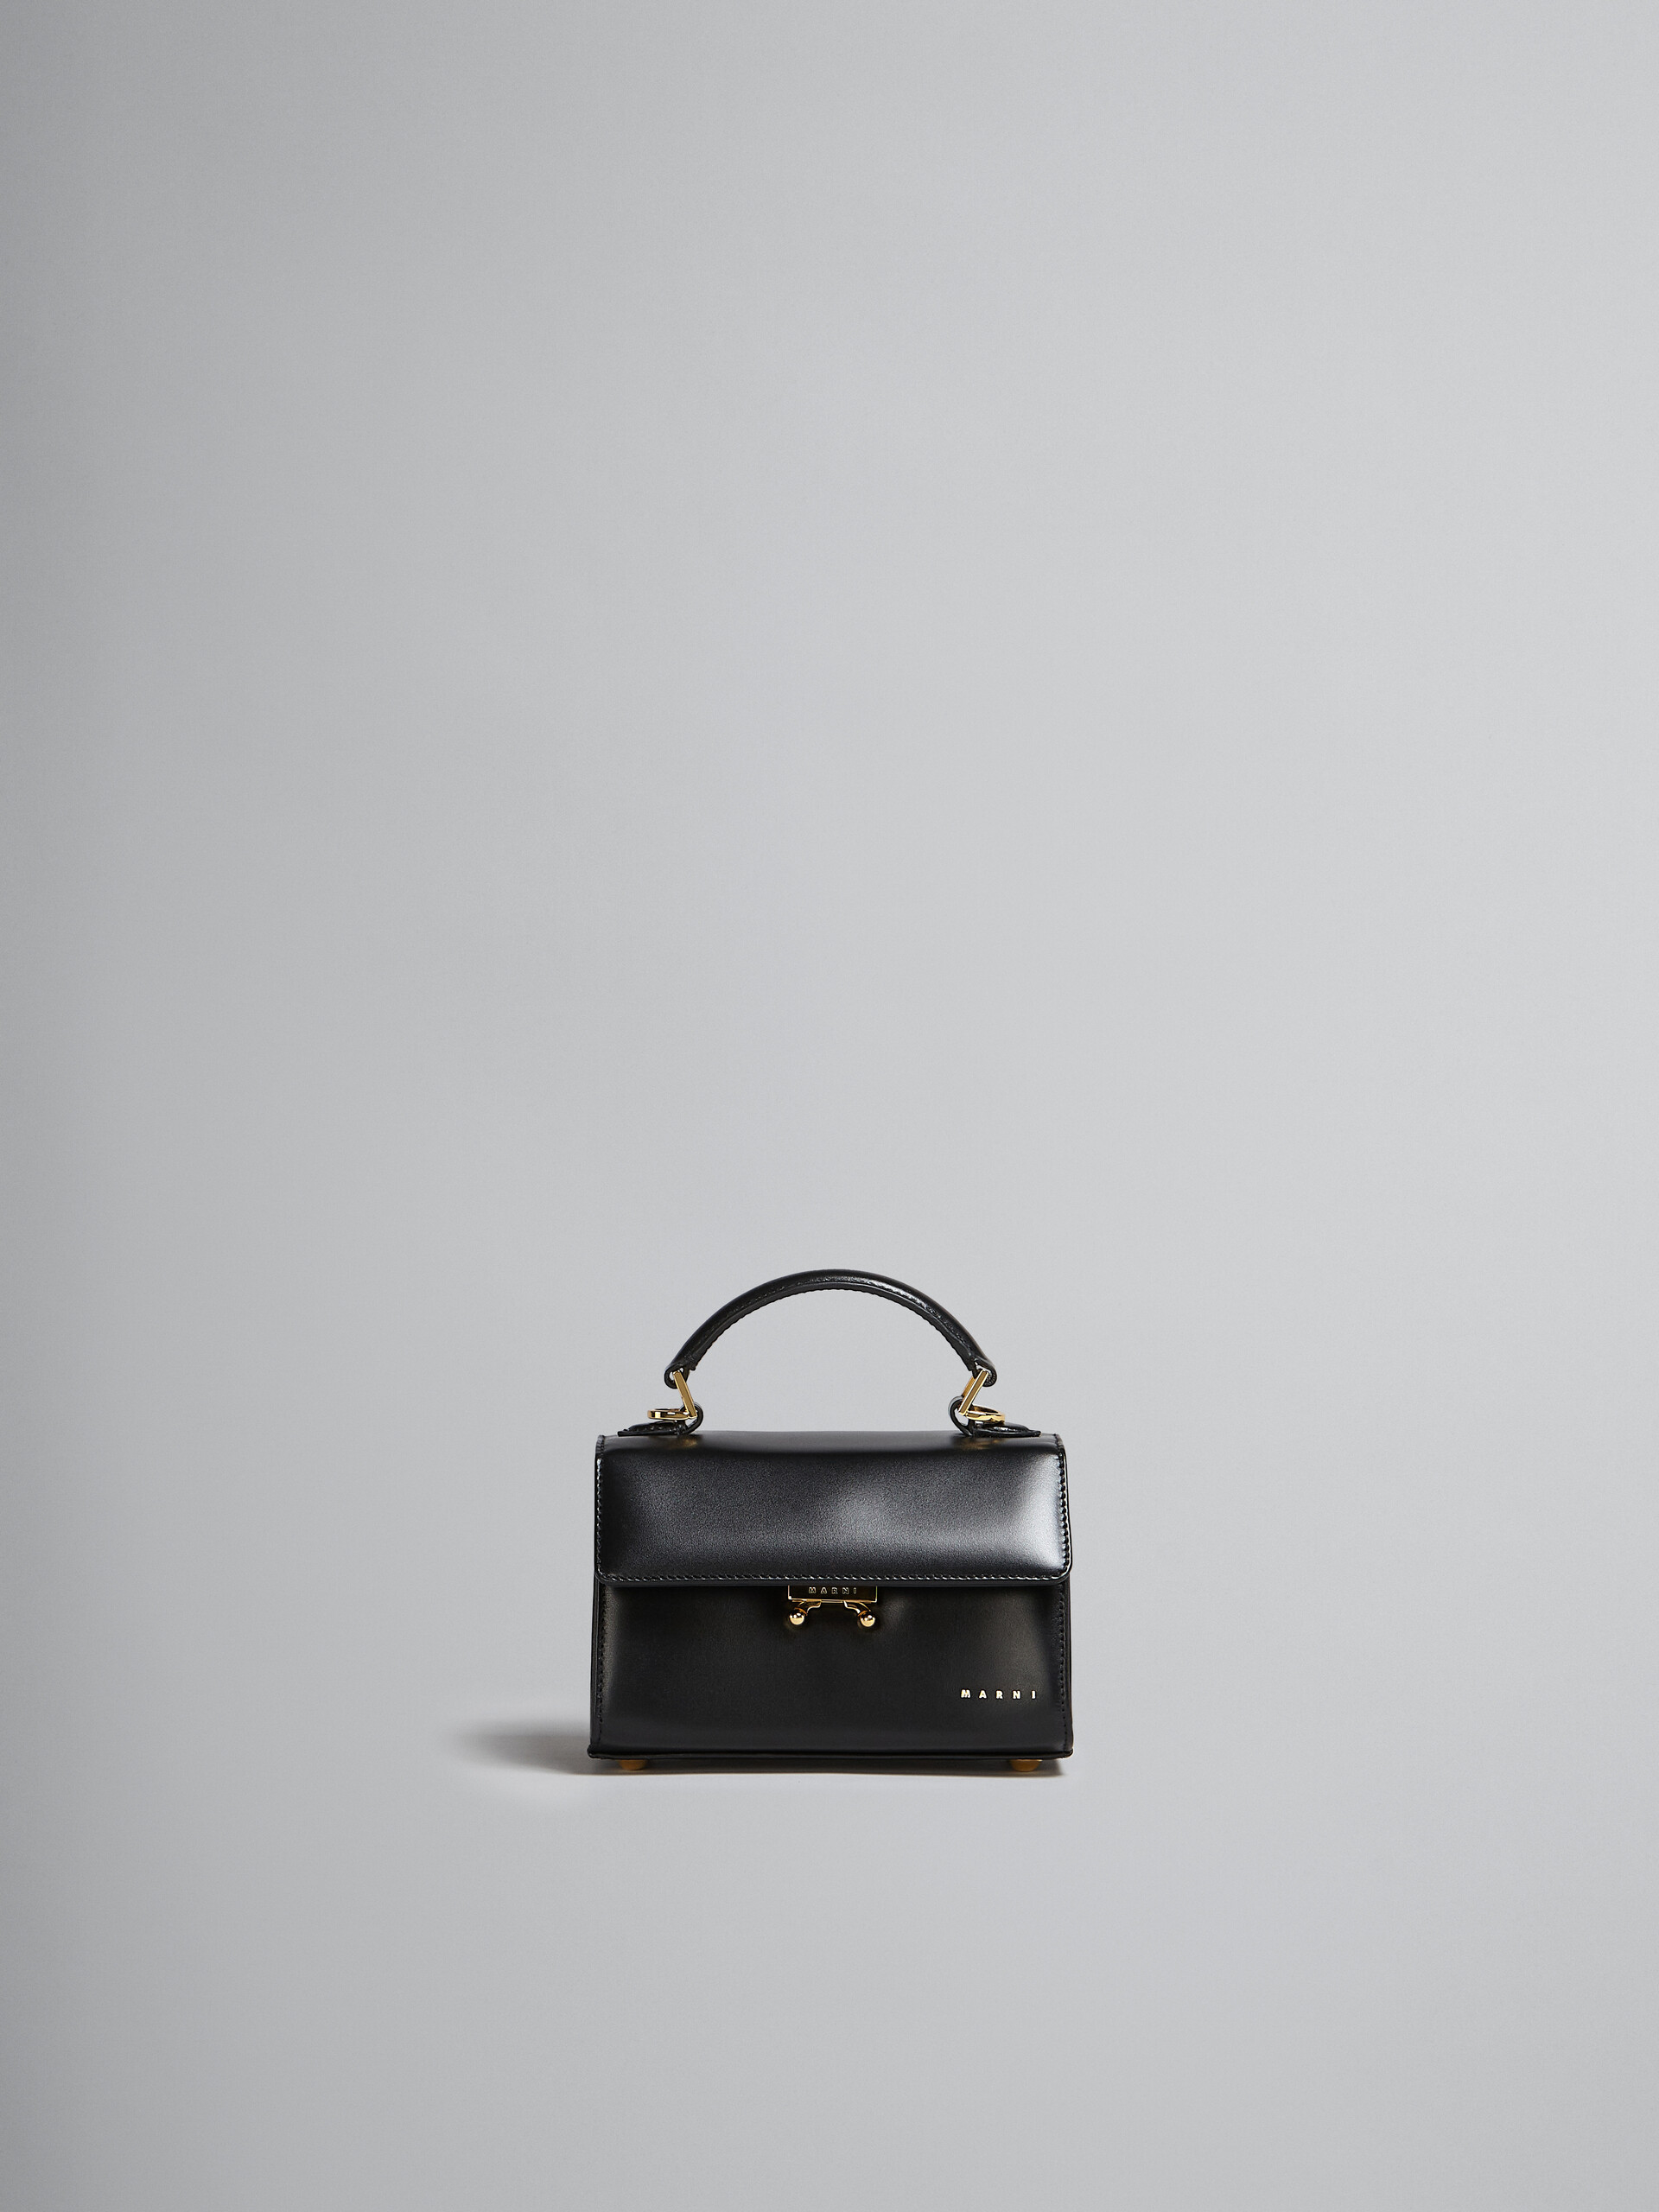 Relativity Mini Bag in black leather - Handbag - Image 1